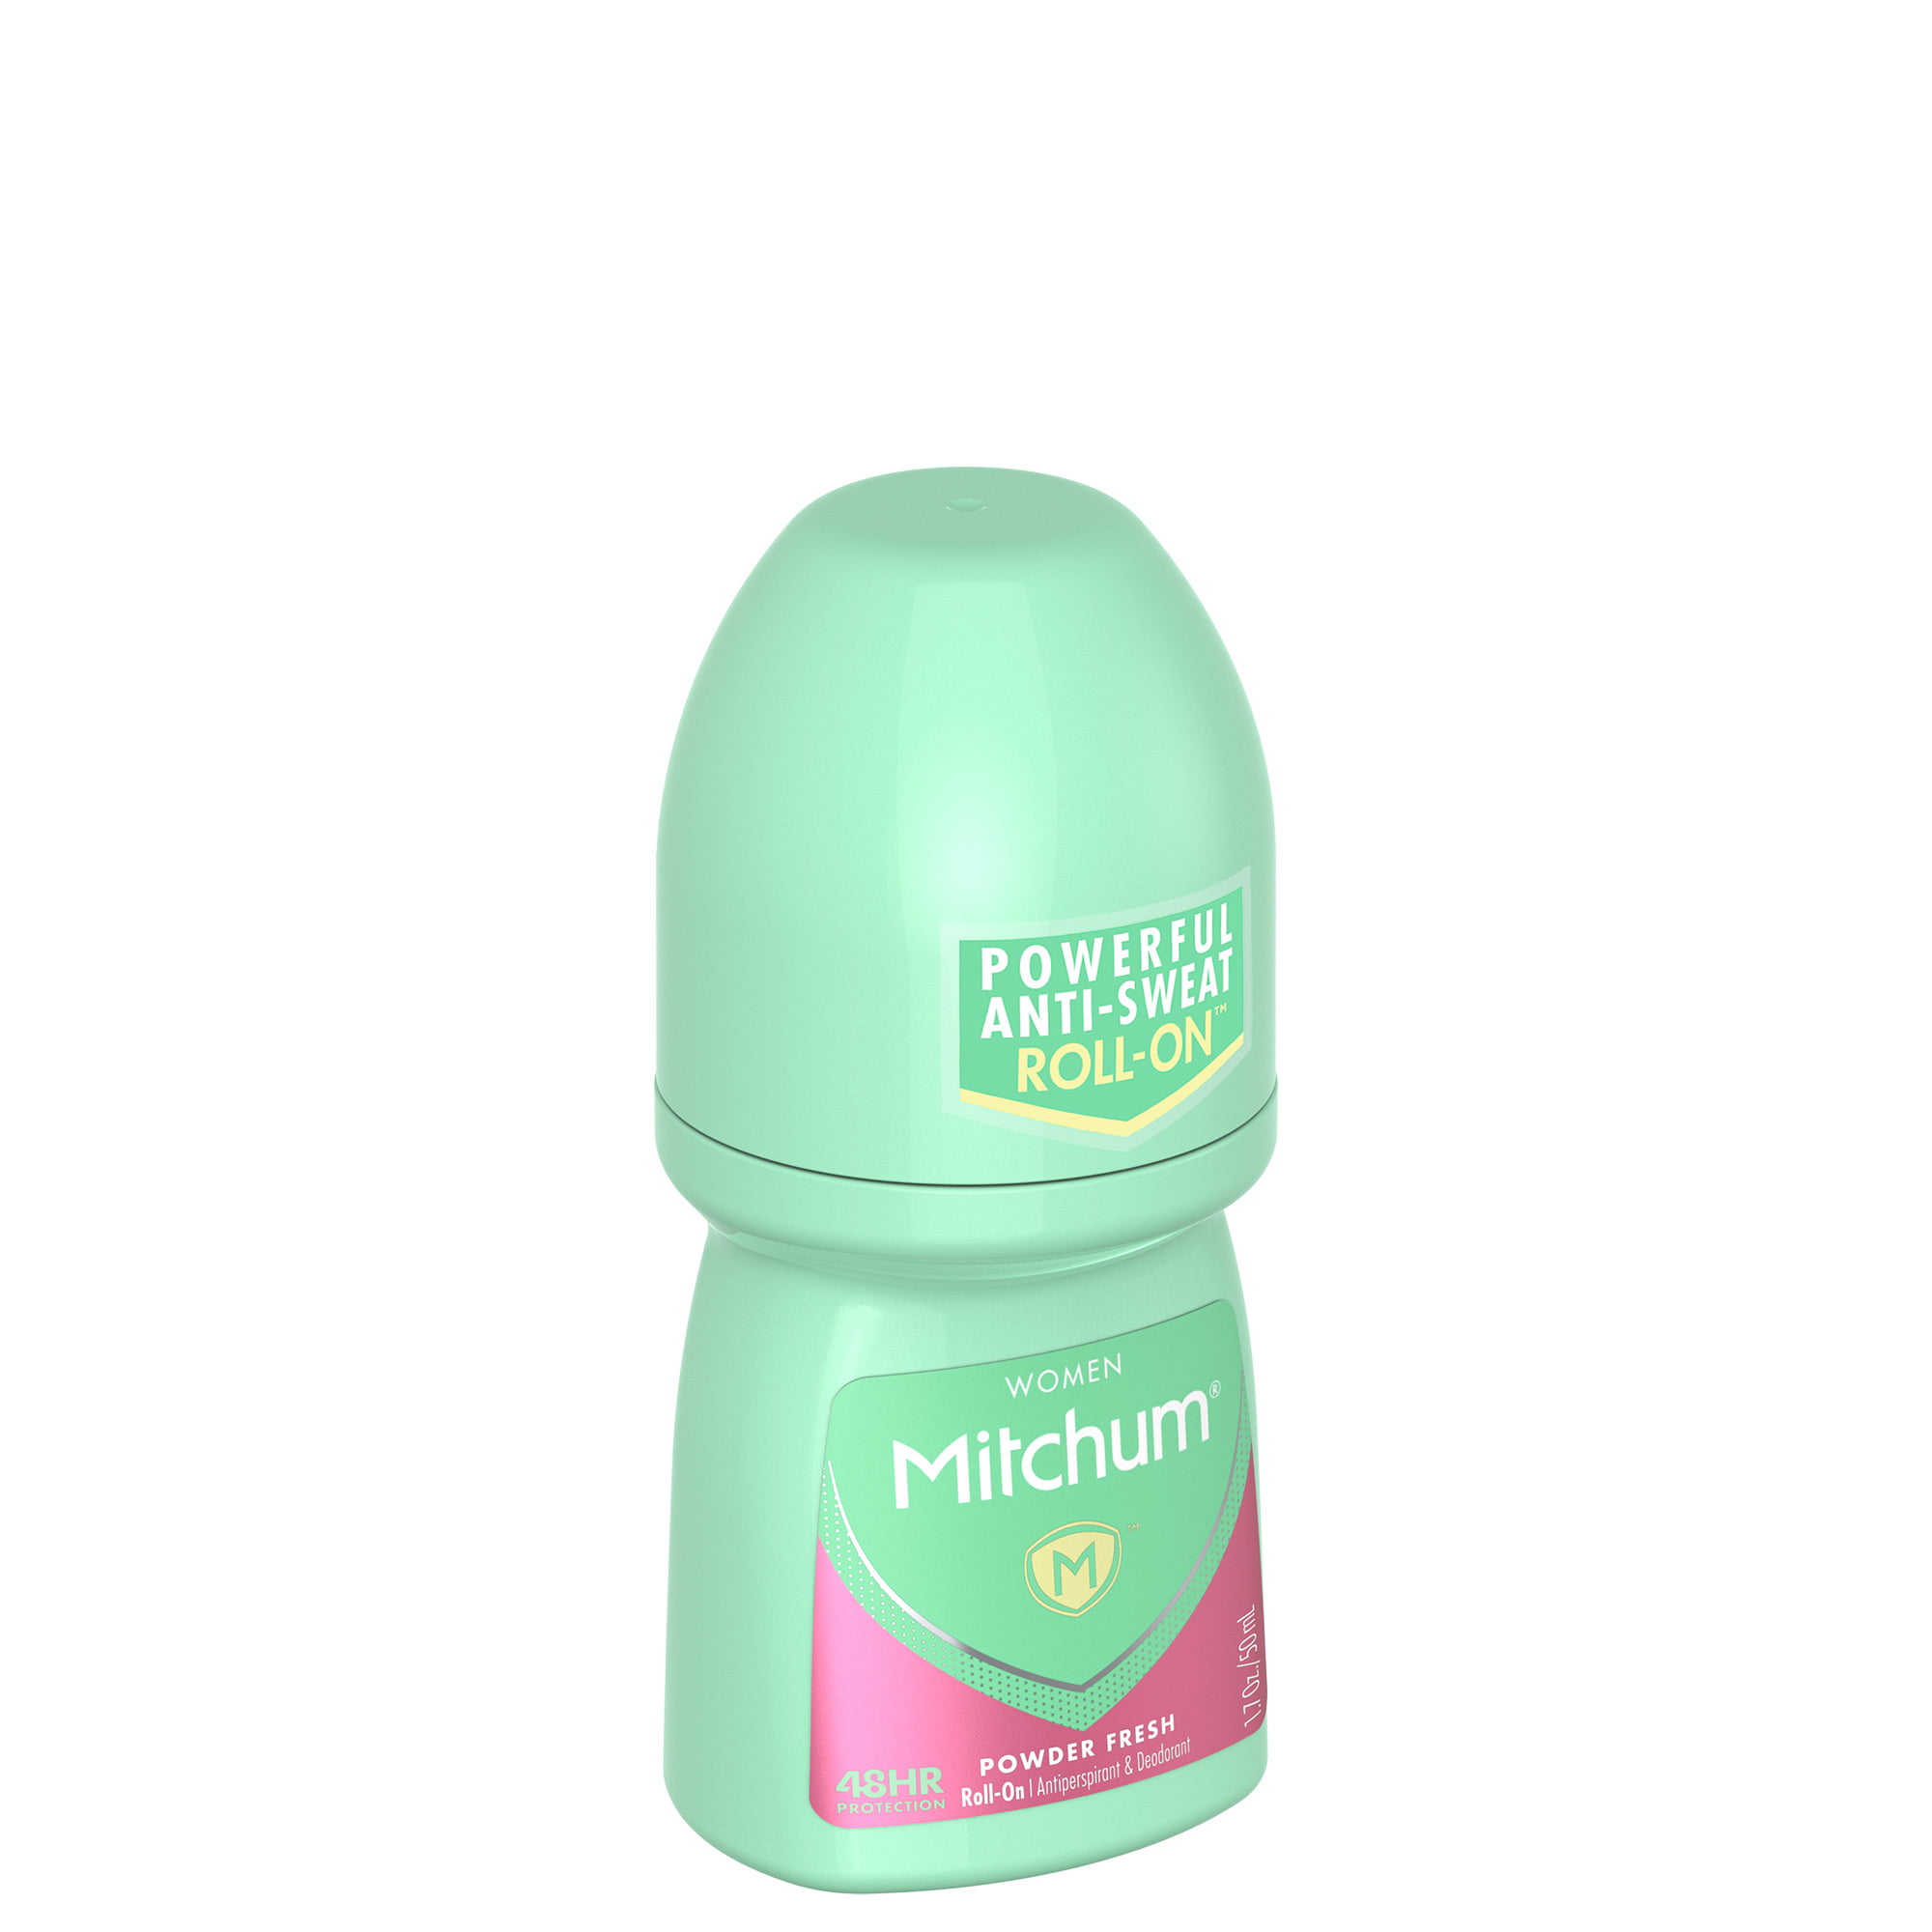 Mitchum Women Powerful Anti-Sweat Antiperspirant Deodorant Roll On, Powder Fresh, 1.7oz - image 2 of 4